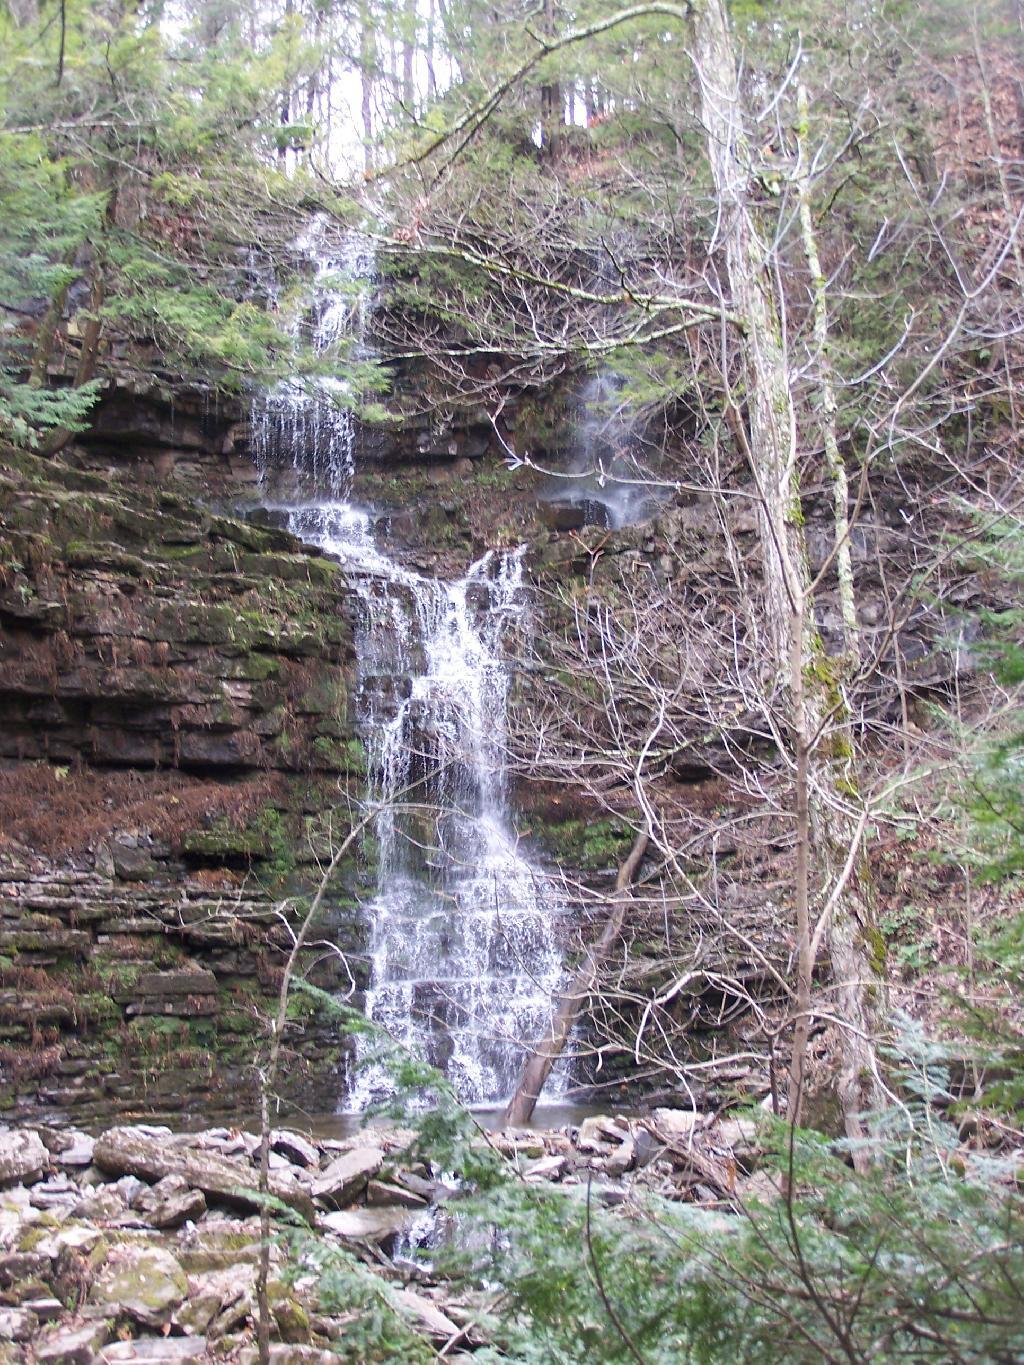 A Small Waterfall